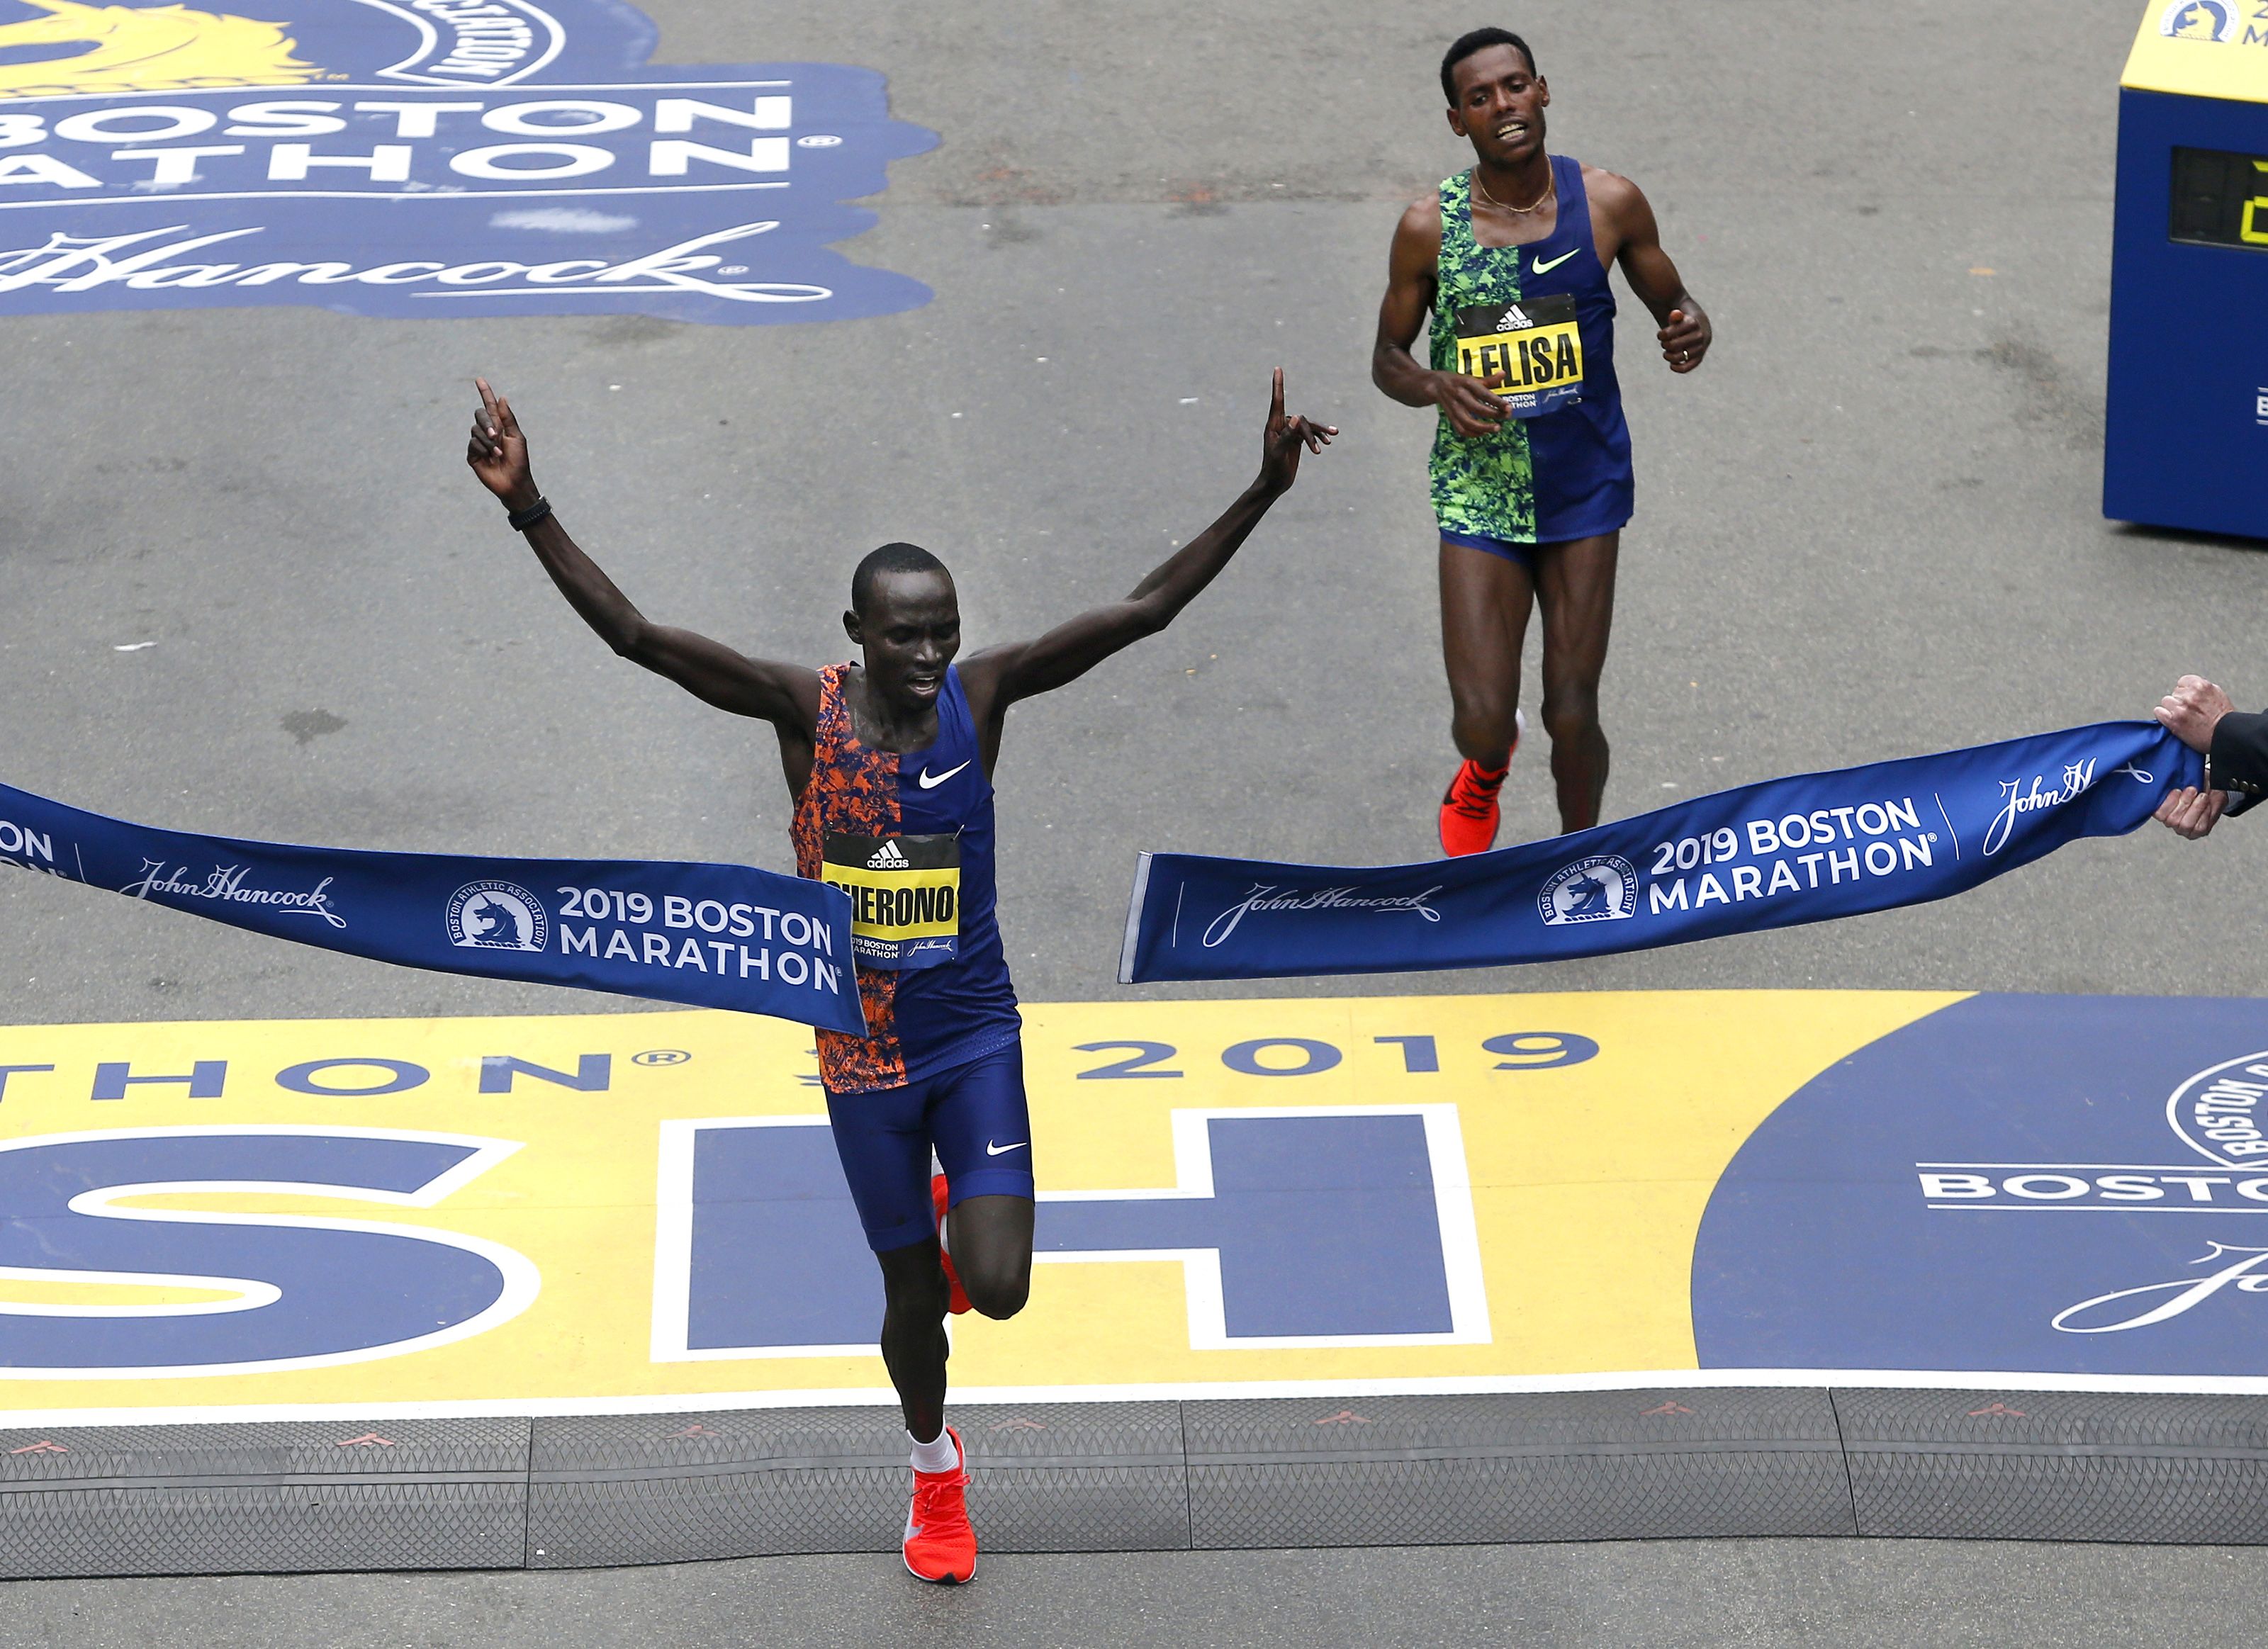 View the Inspiring Scenes from 2019 Boston Marathon